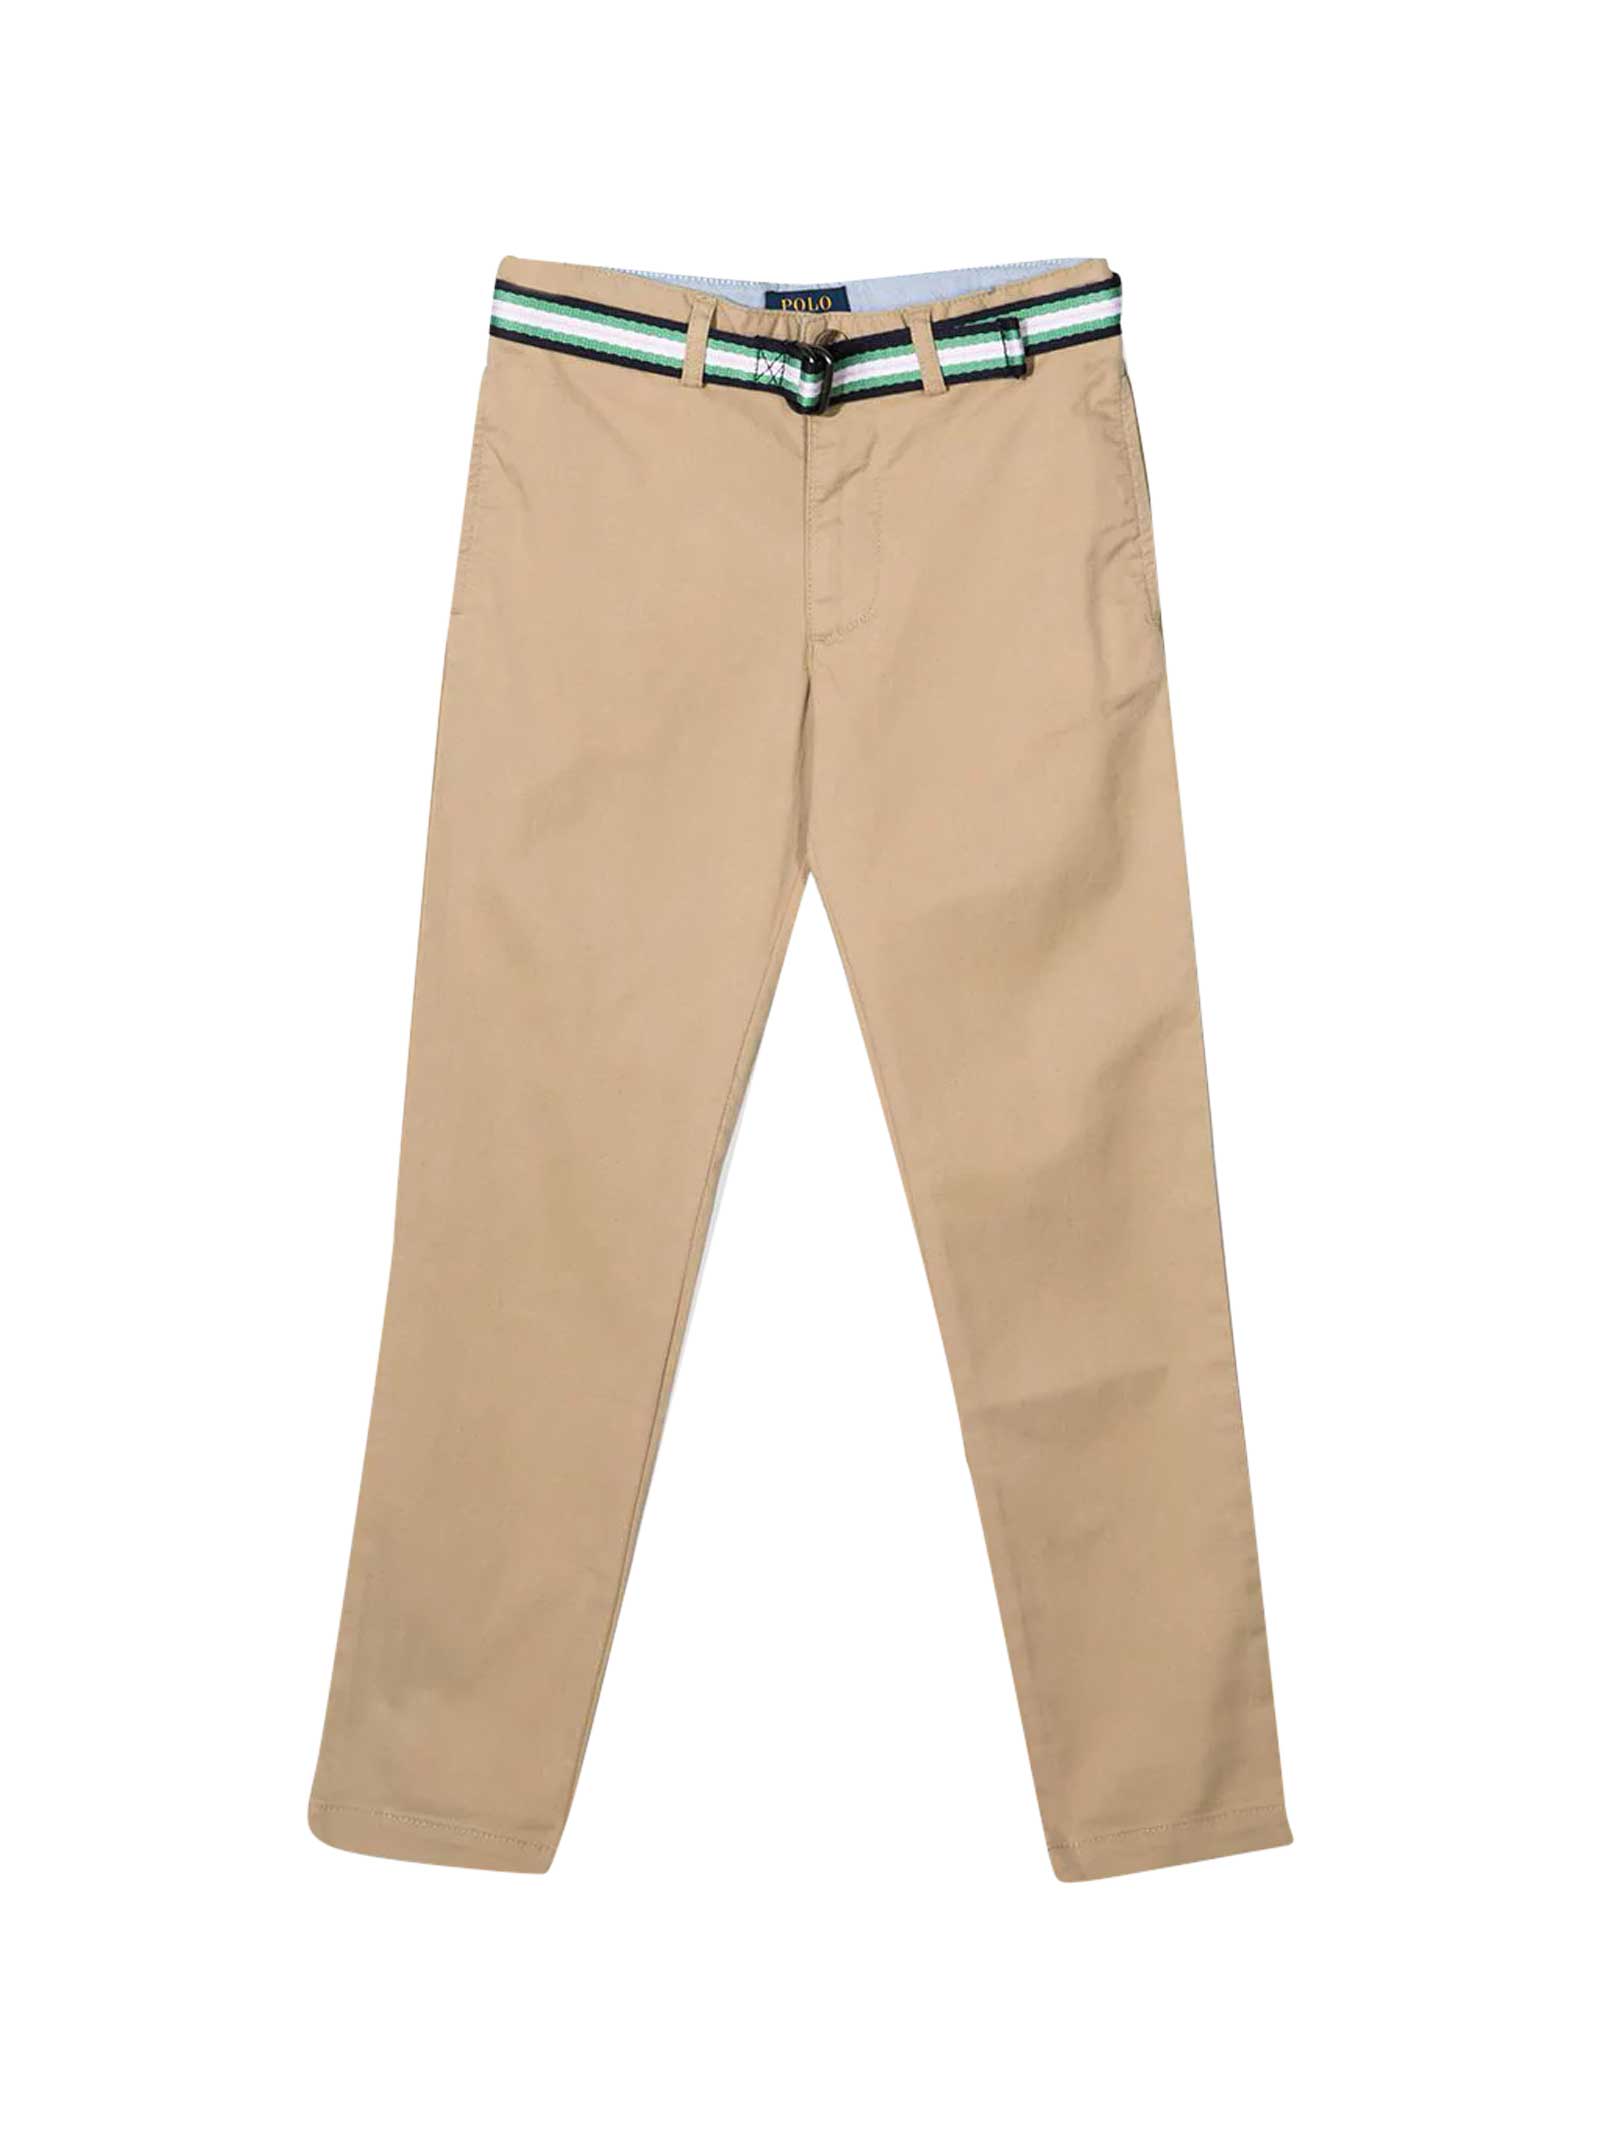 Ralph Lauren Khaki Trousers With Belt